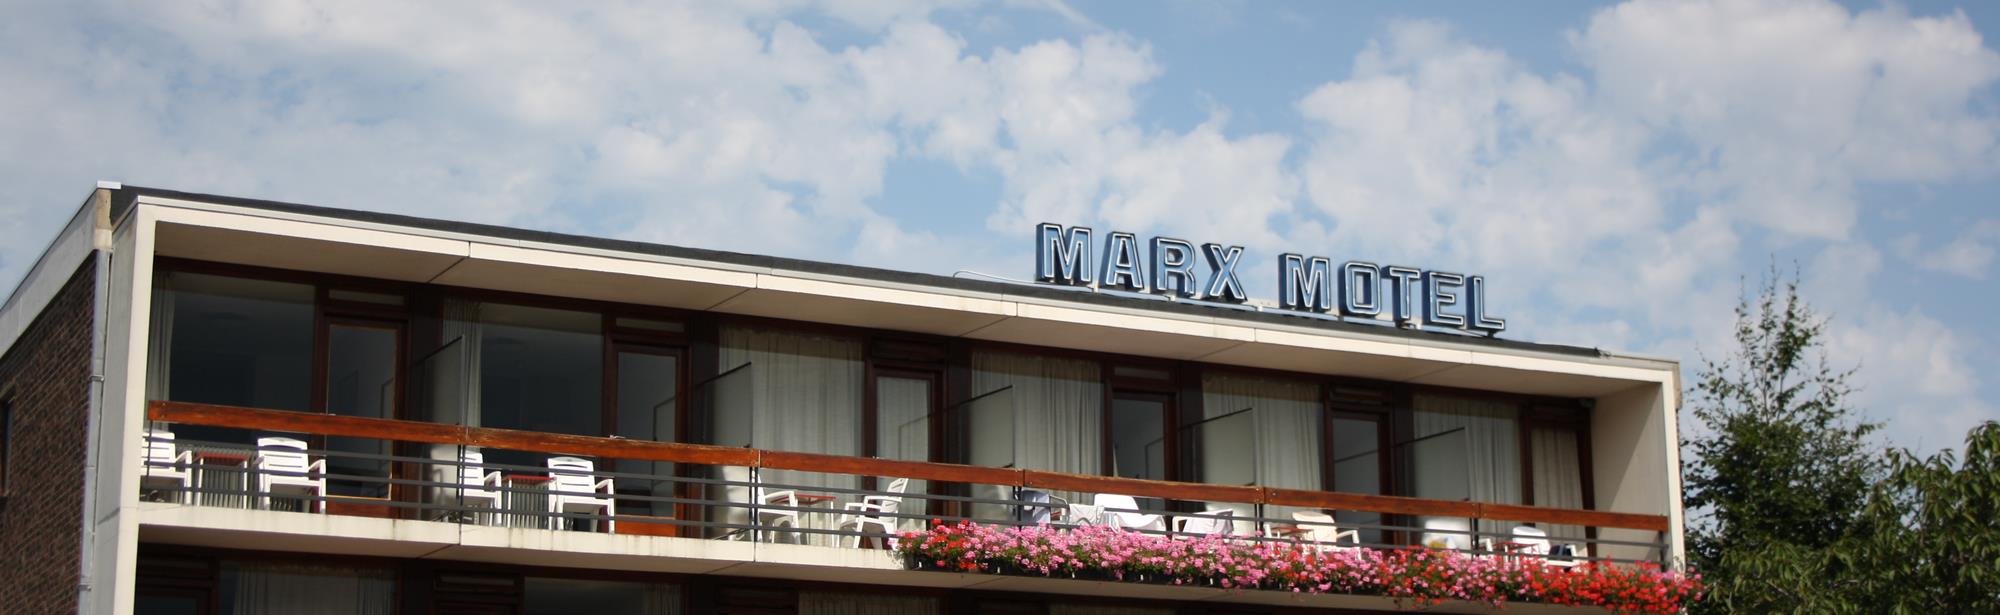 Marx Motel